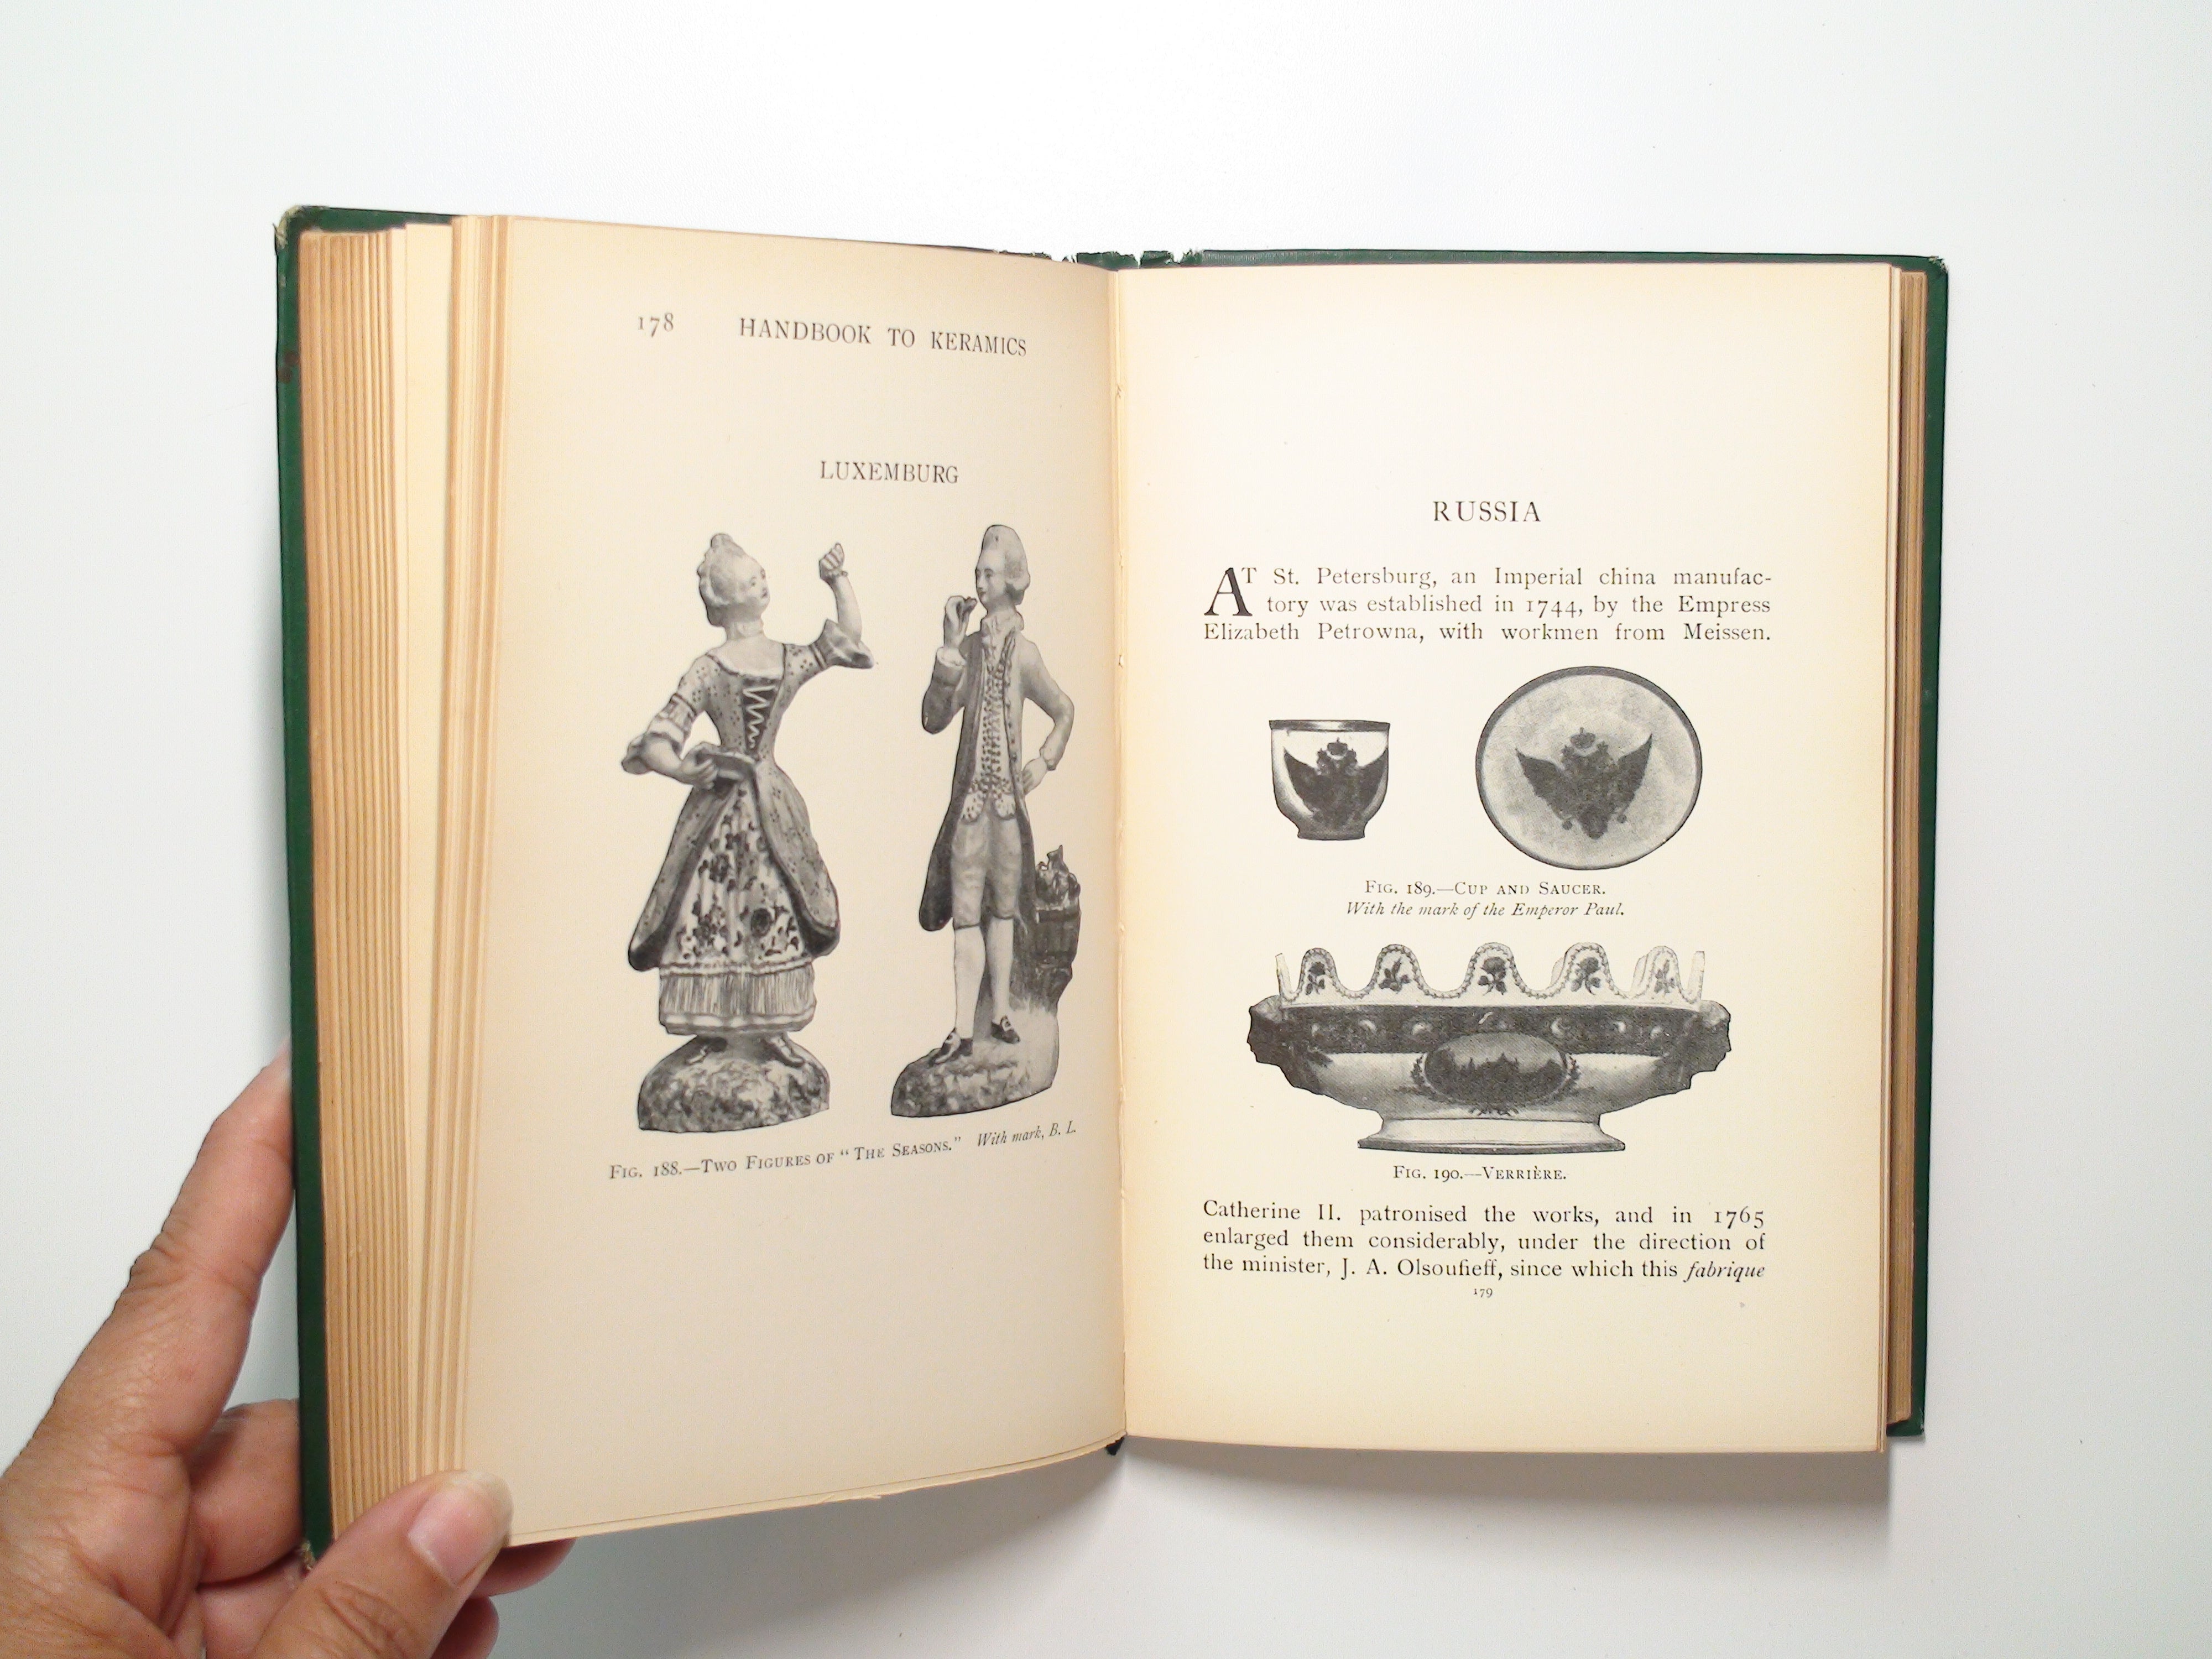 The Collector's Handbook to Keramics, William Chaffers, 1st Ed, 1911